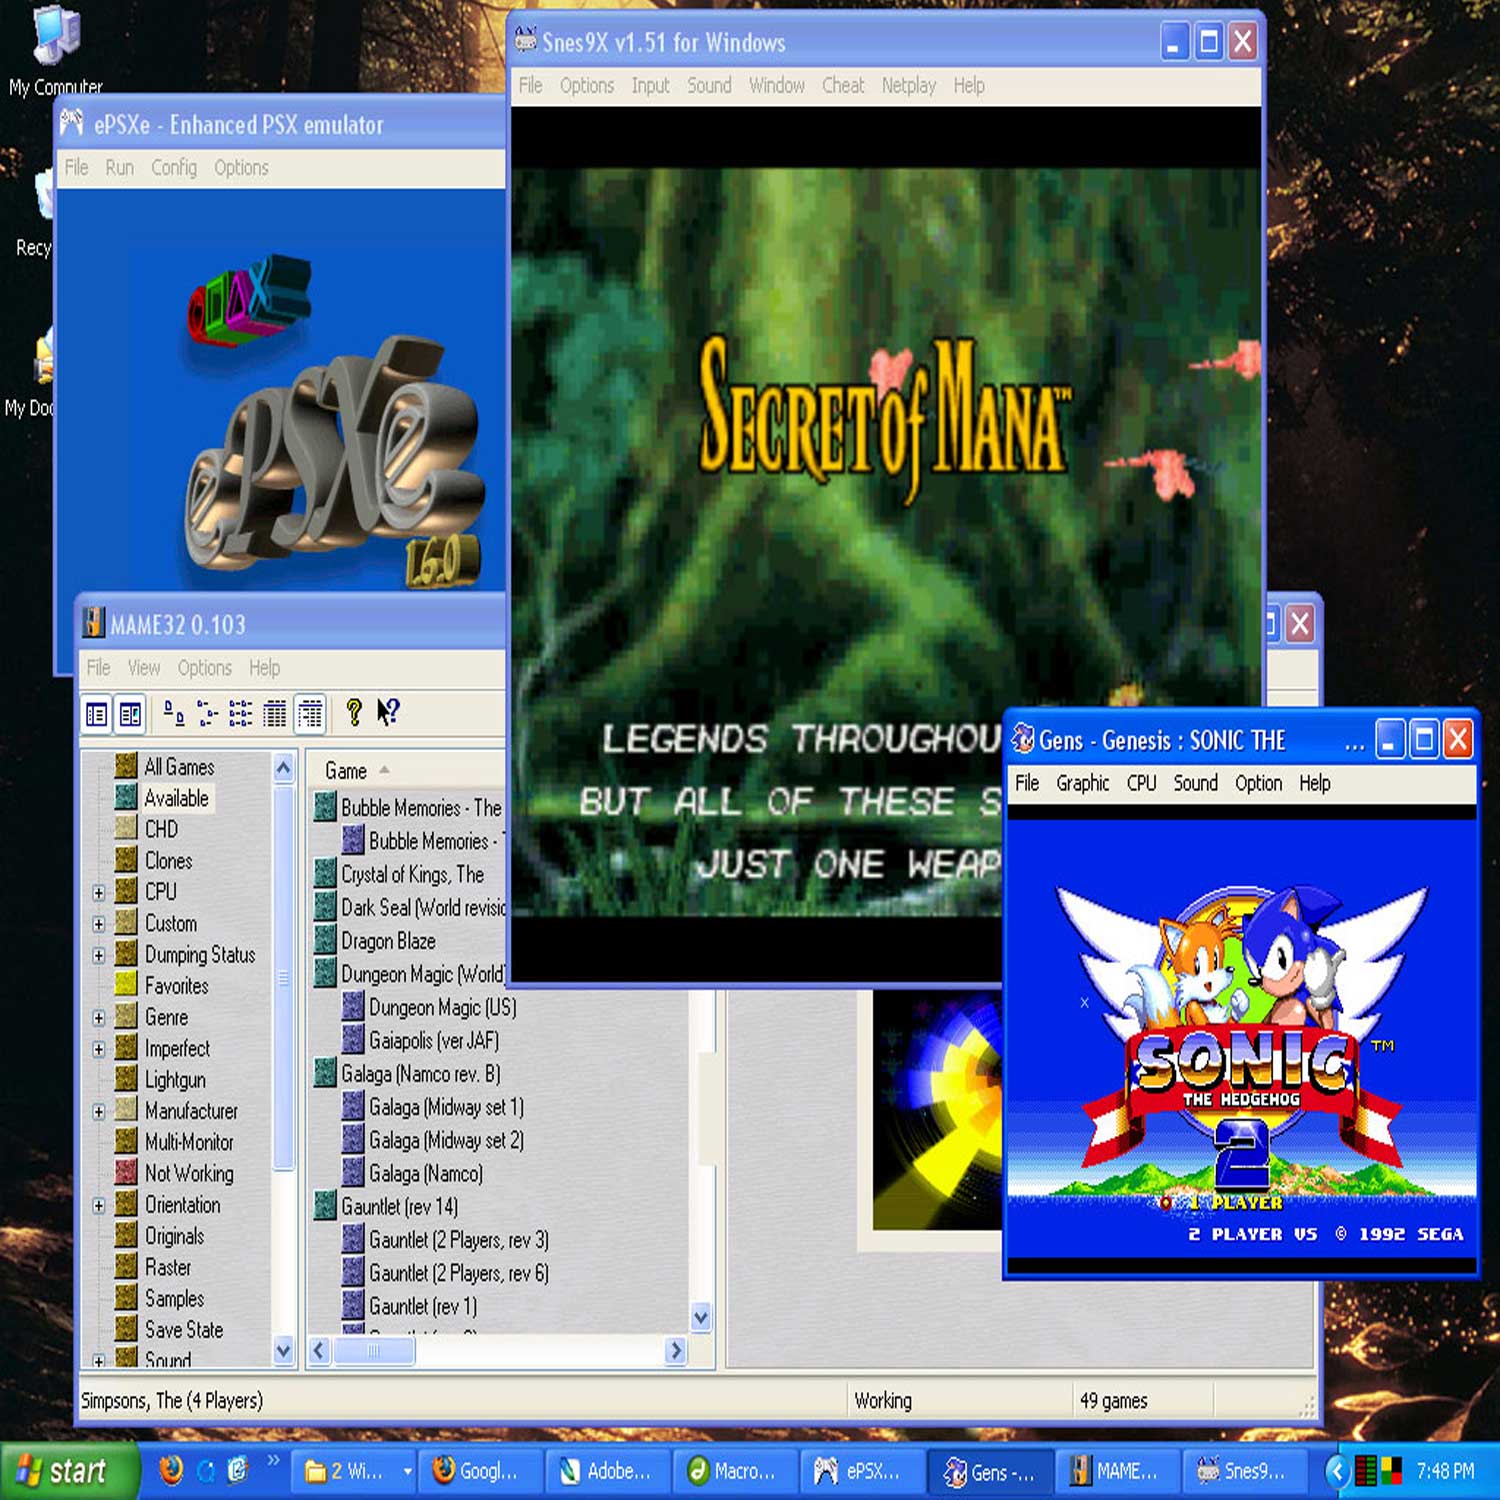 snes emulator games for mac